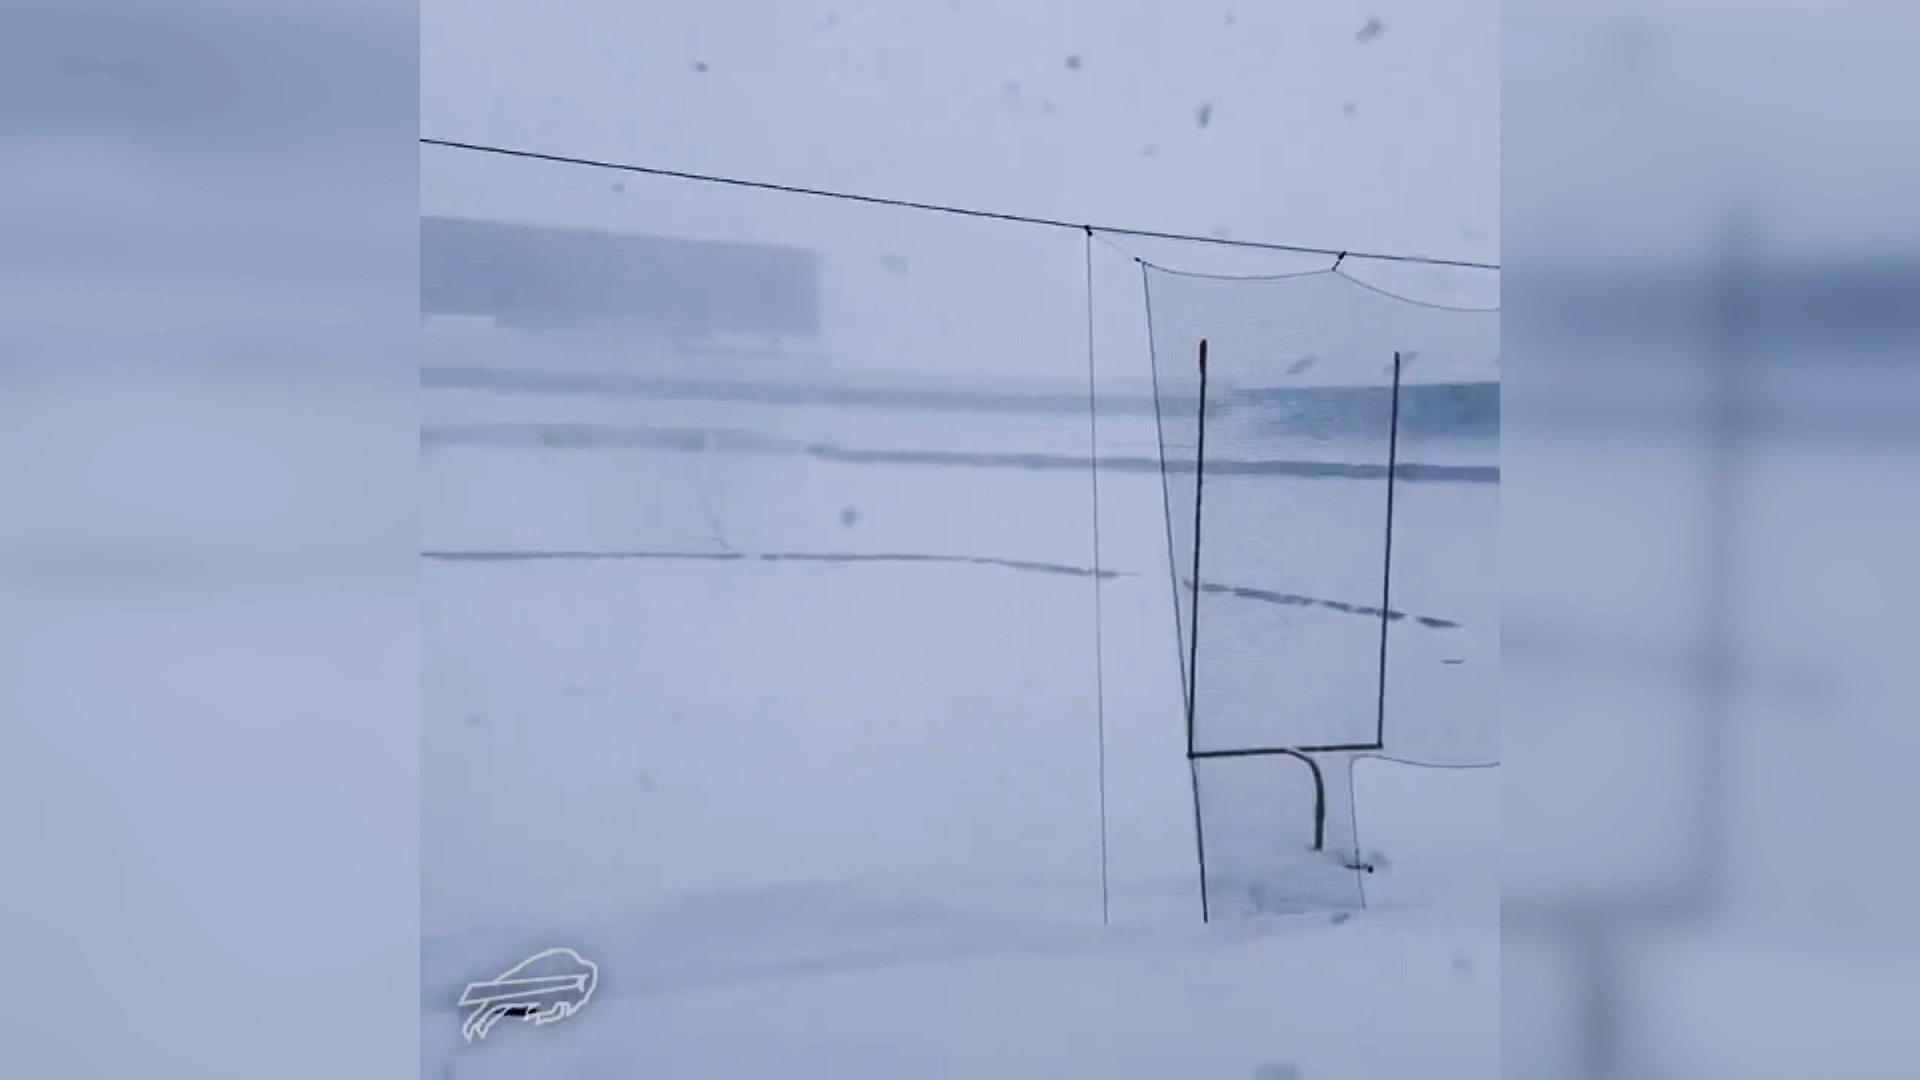 Video shows Buffalo Bills stadium buried in snow after massive storm - CNN  Video